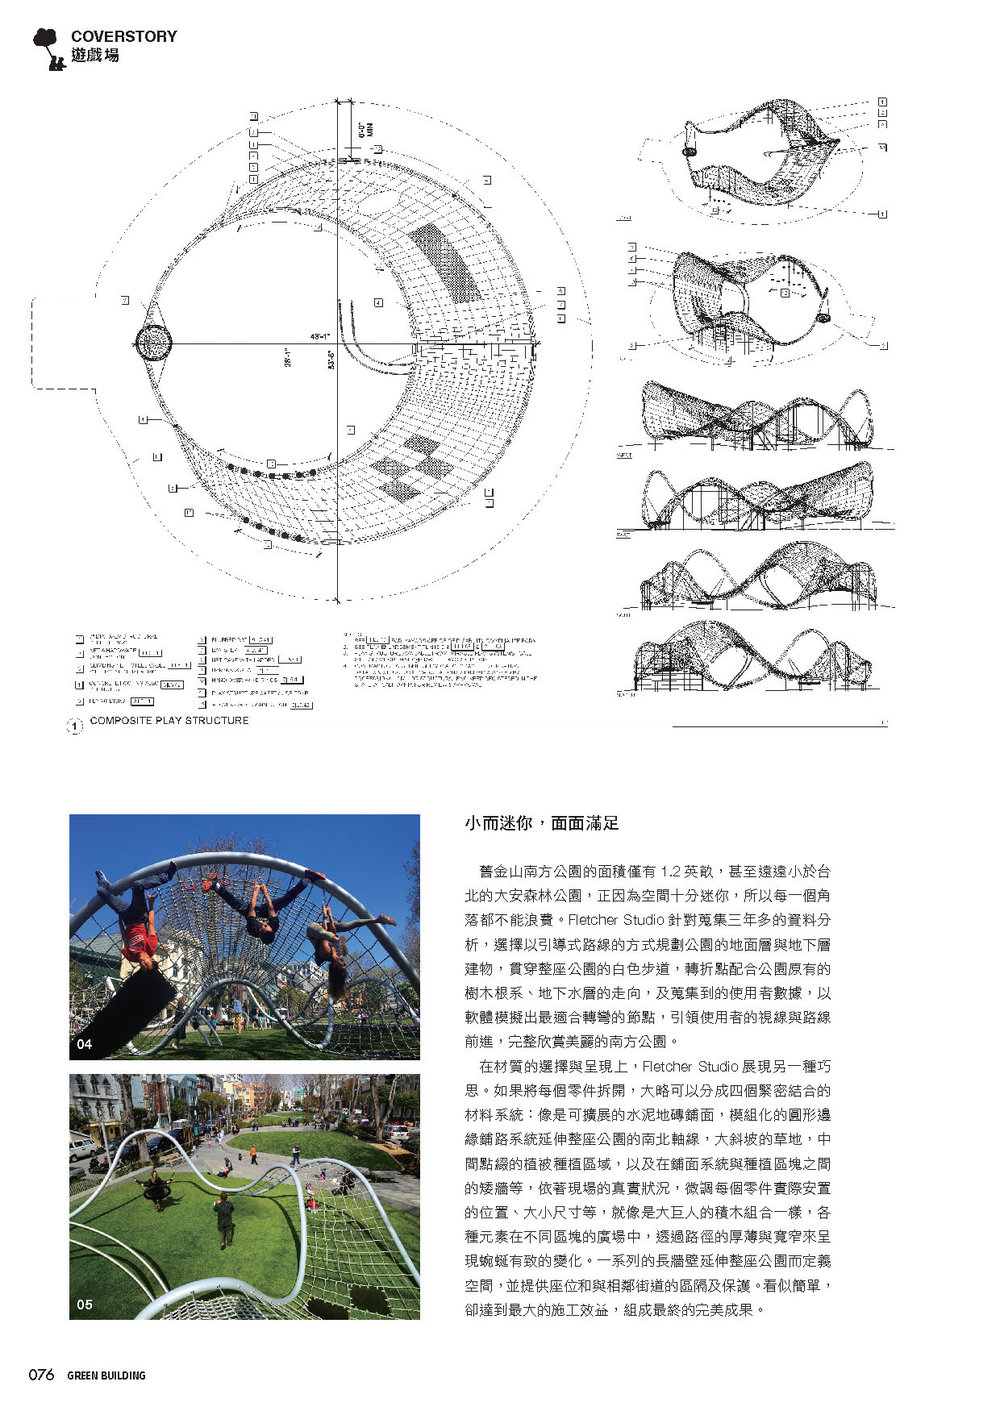 Green Building magazine 2_Page_5.jpg